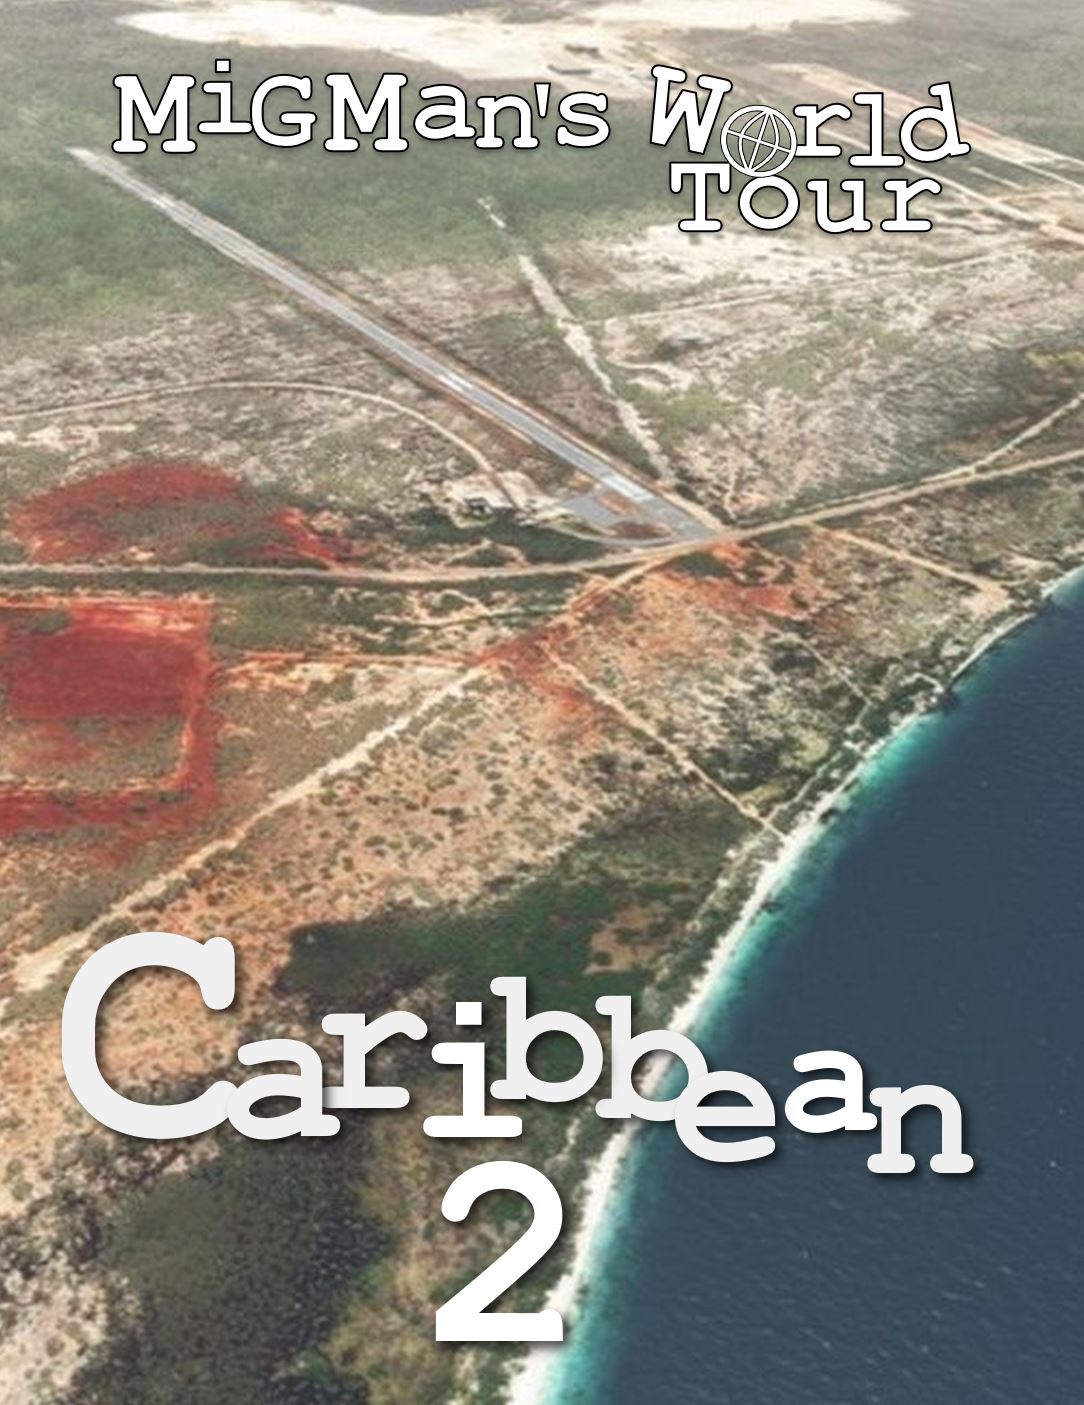 Caribbean 2